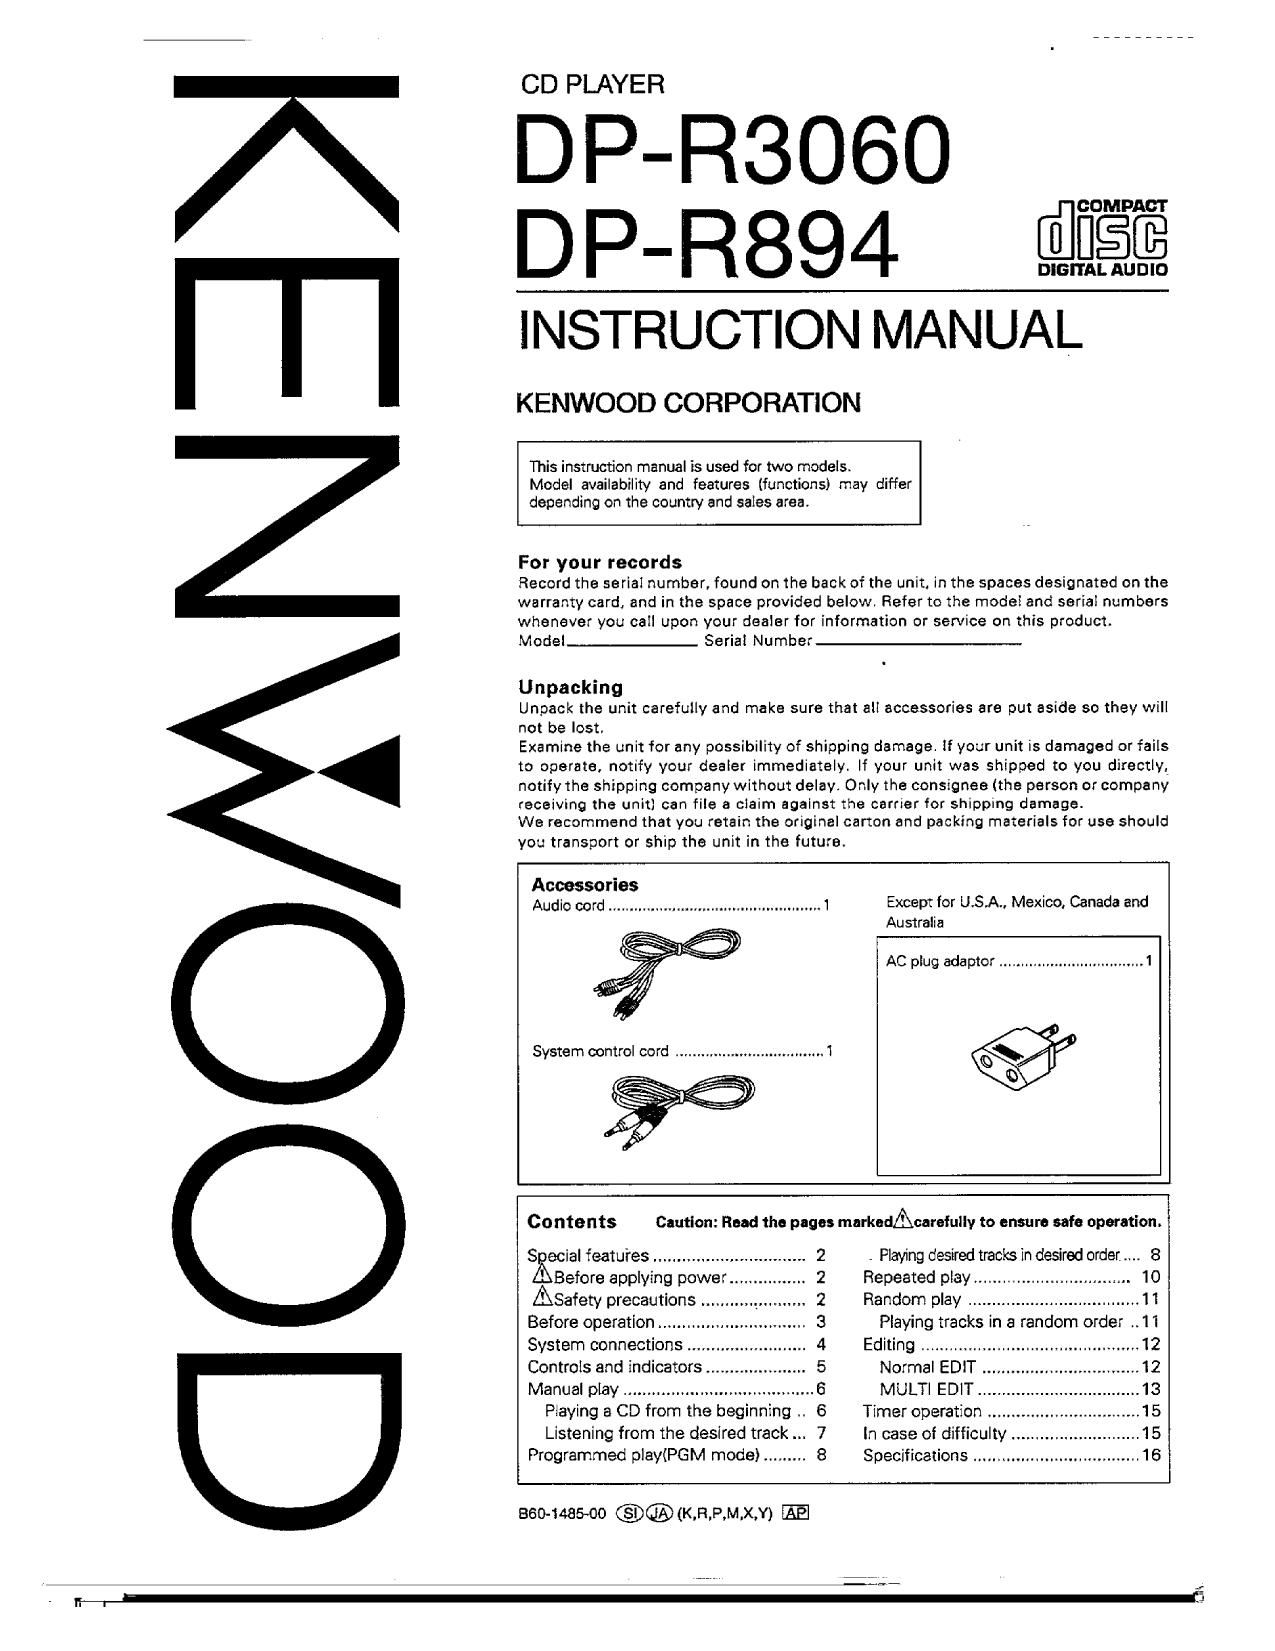 Kenwood DPR 894 Owners Manual